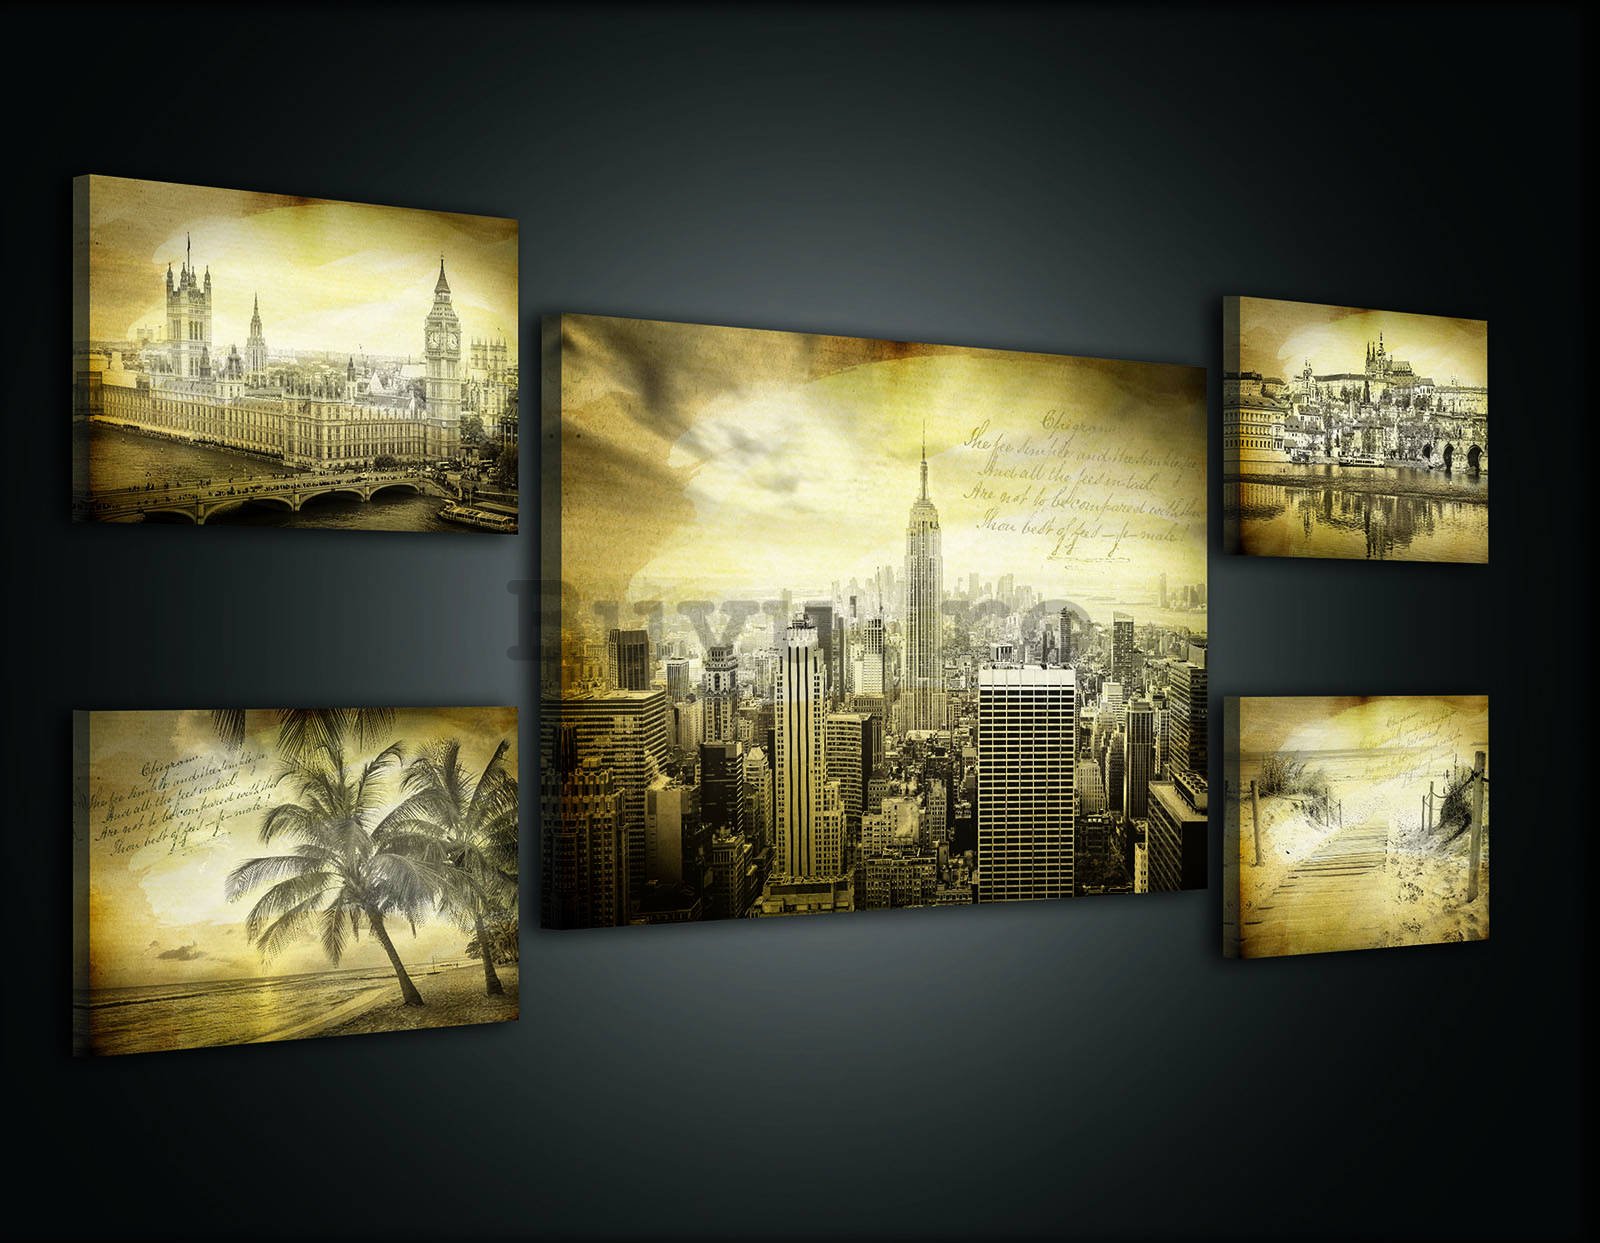 Tablou canvas: Carte poștală vintage - set 1 buc 70x50 cm și 4 buc 32,4x22,8 cm